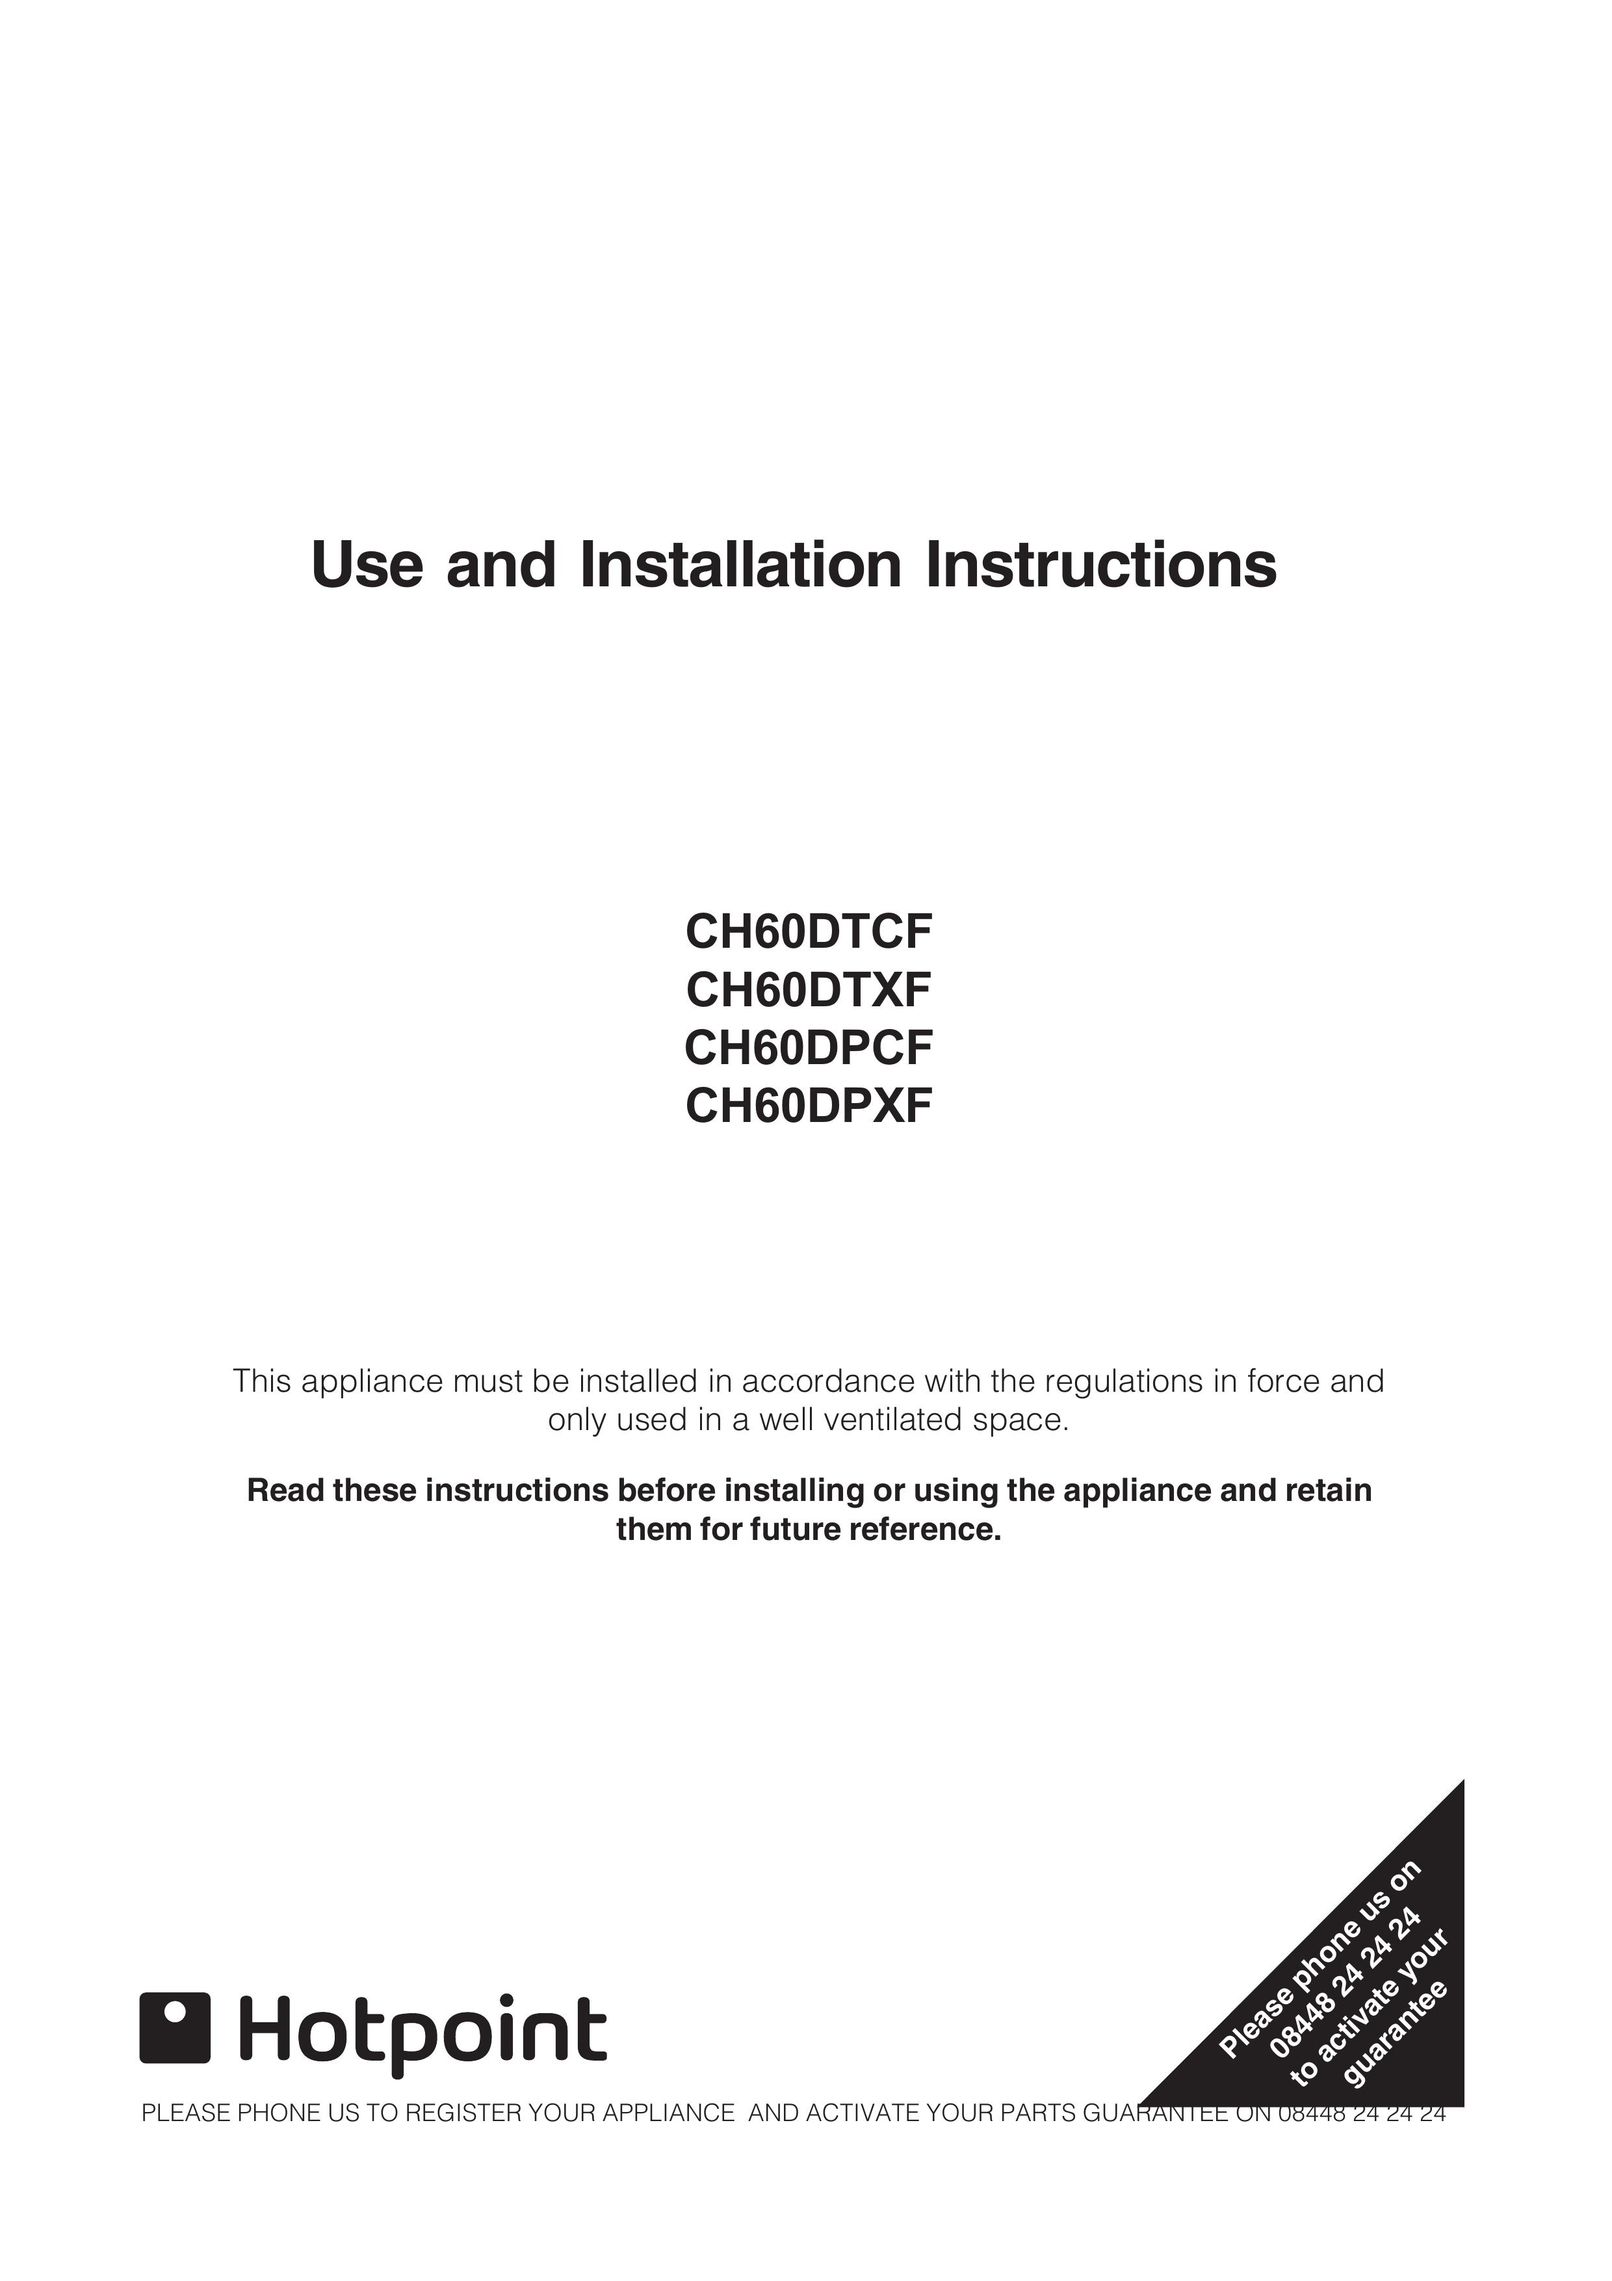 Xerox CH60DPXF Oven User Manual